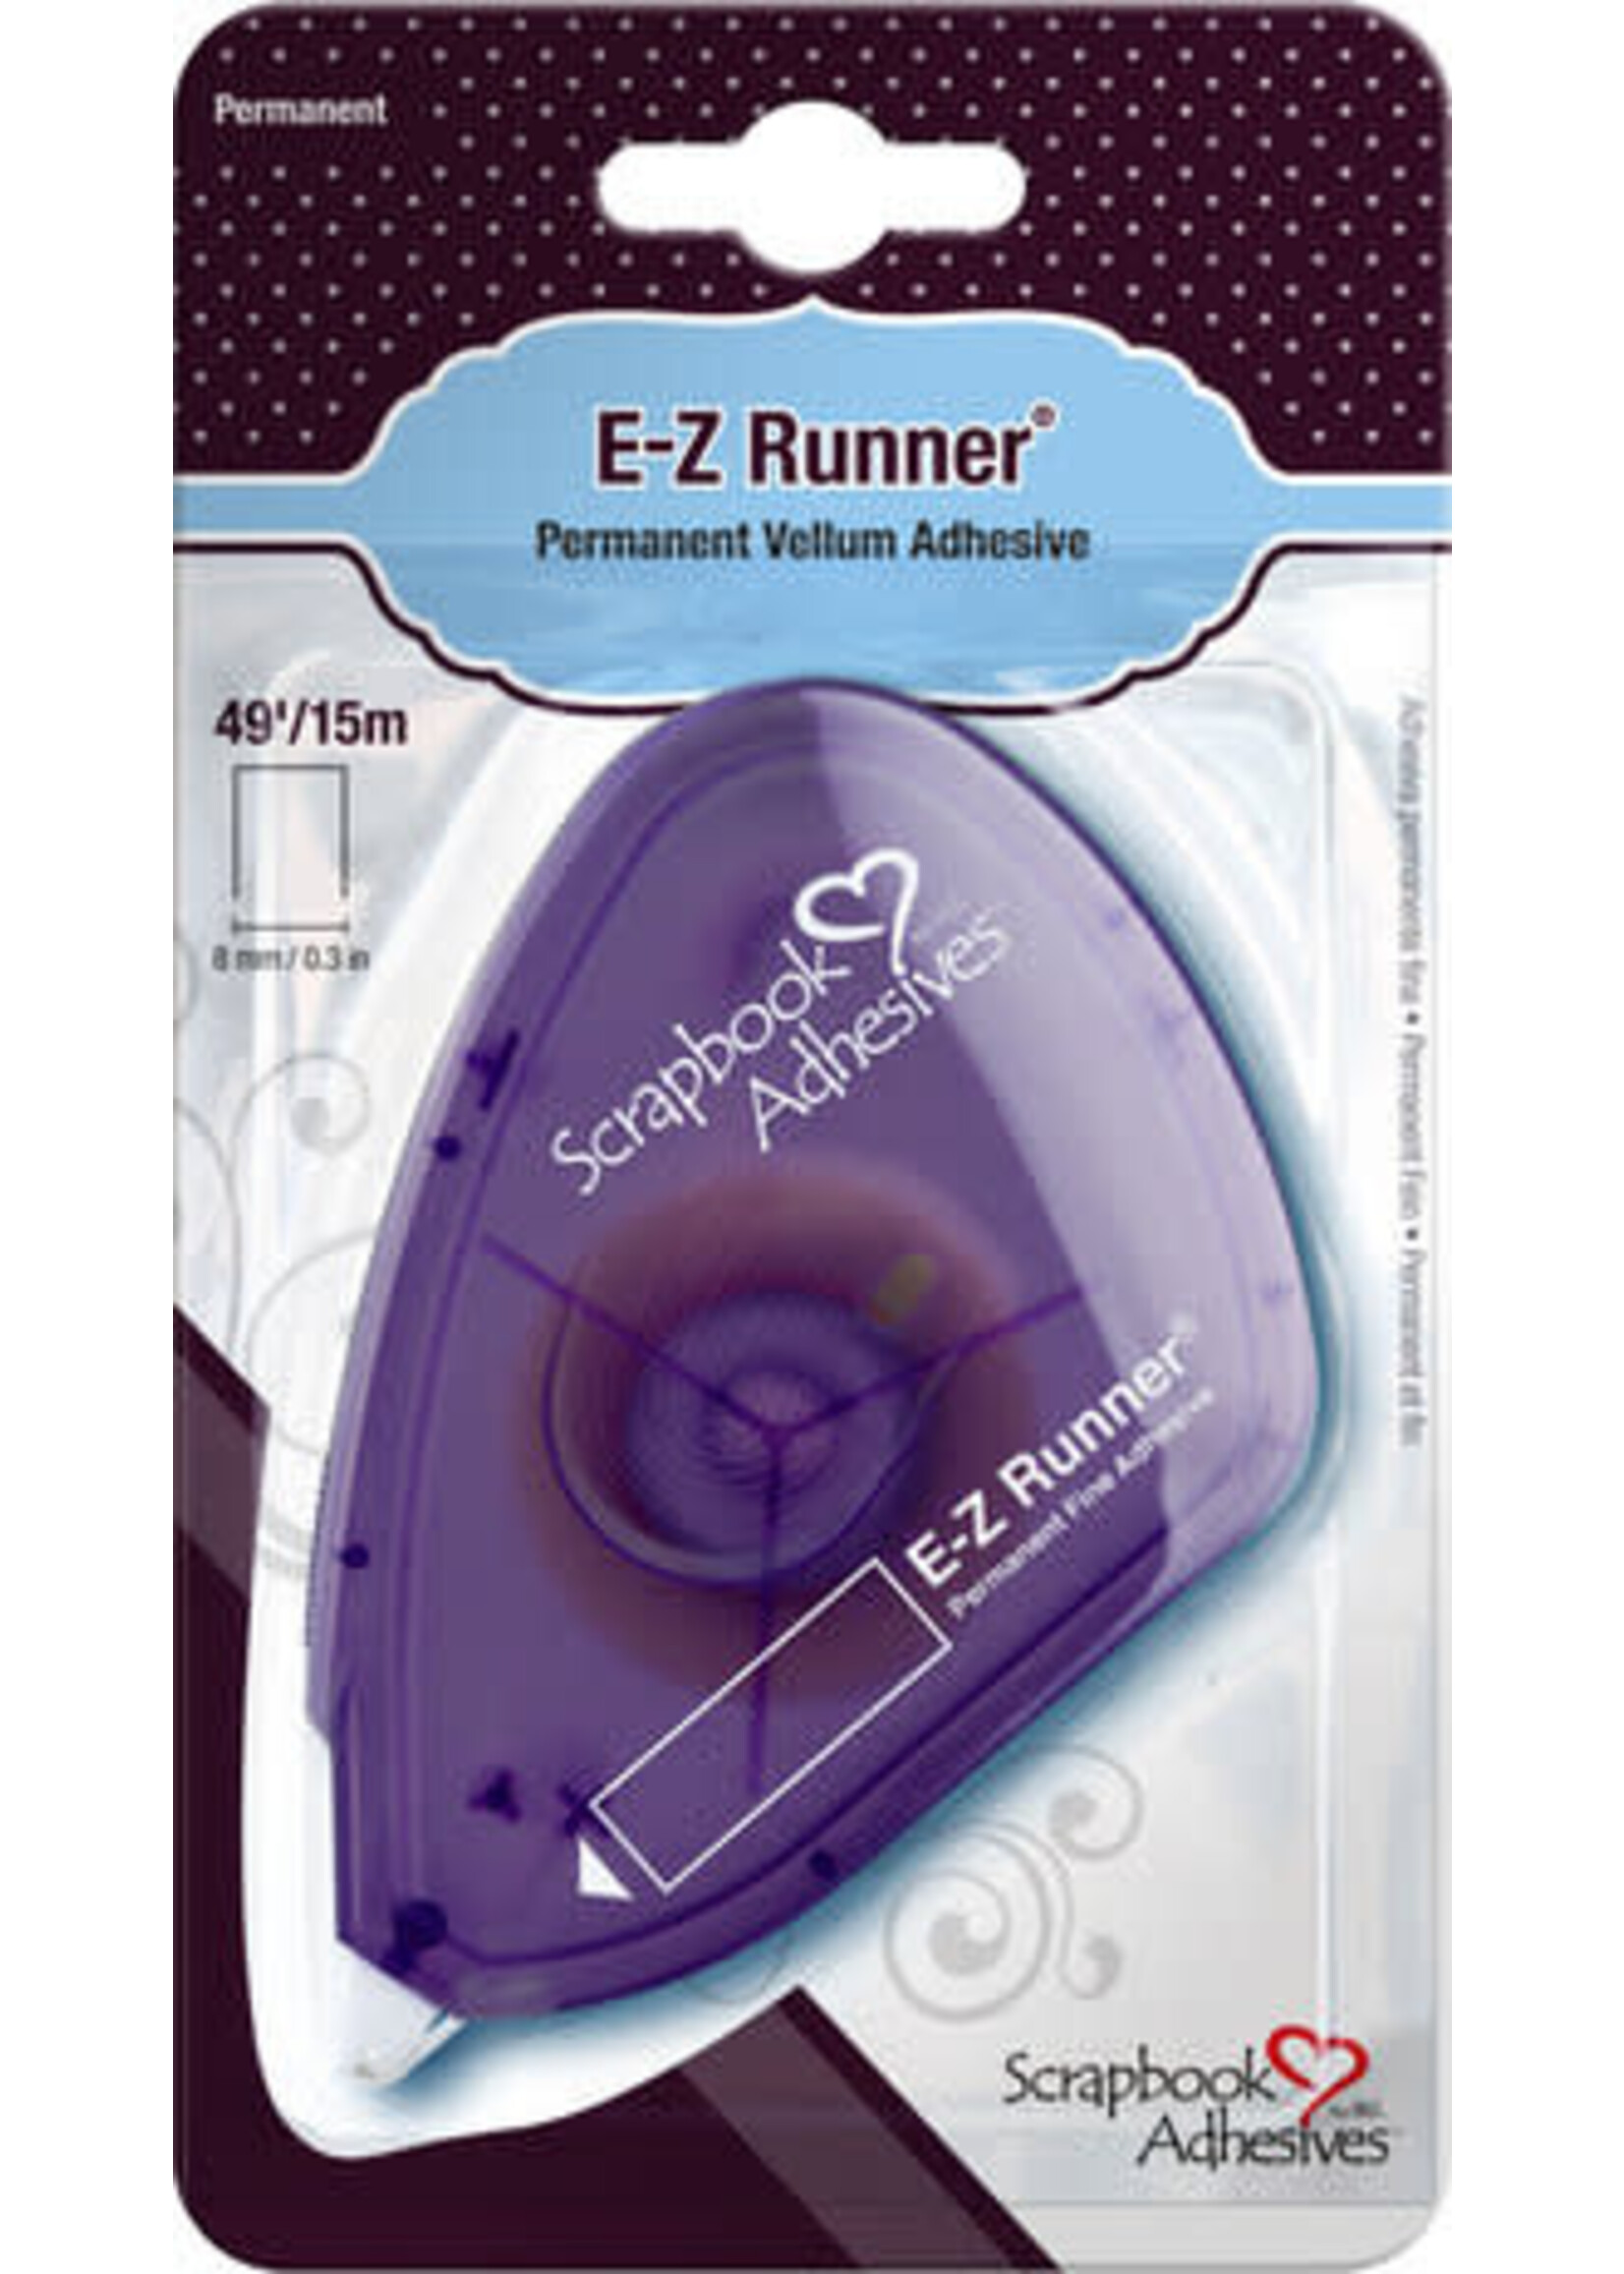 Scrapbook Adhesives E-Z Runner Permanent Vellum Adhesive Dispenser (01643)